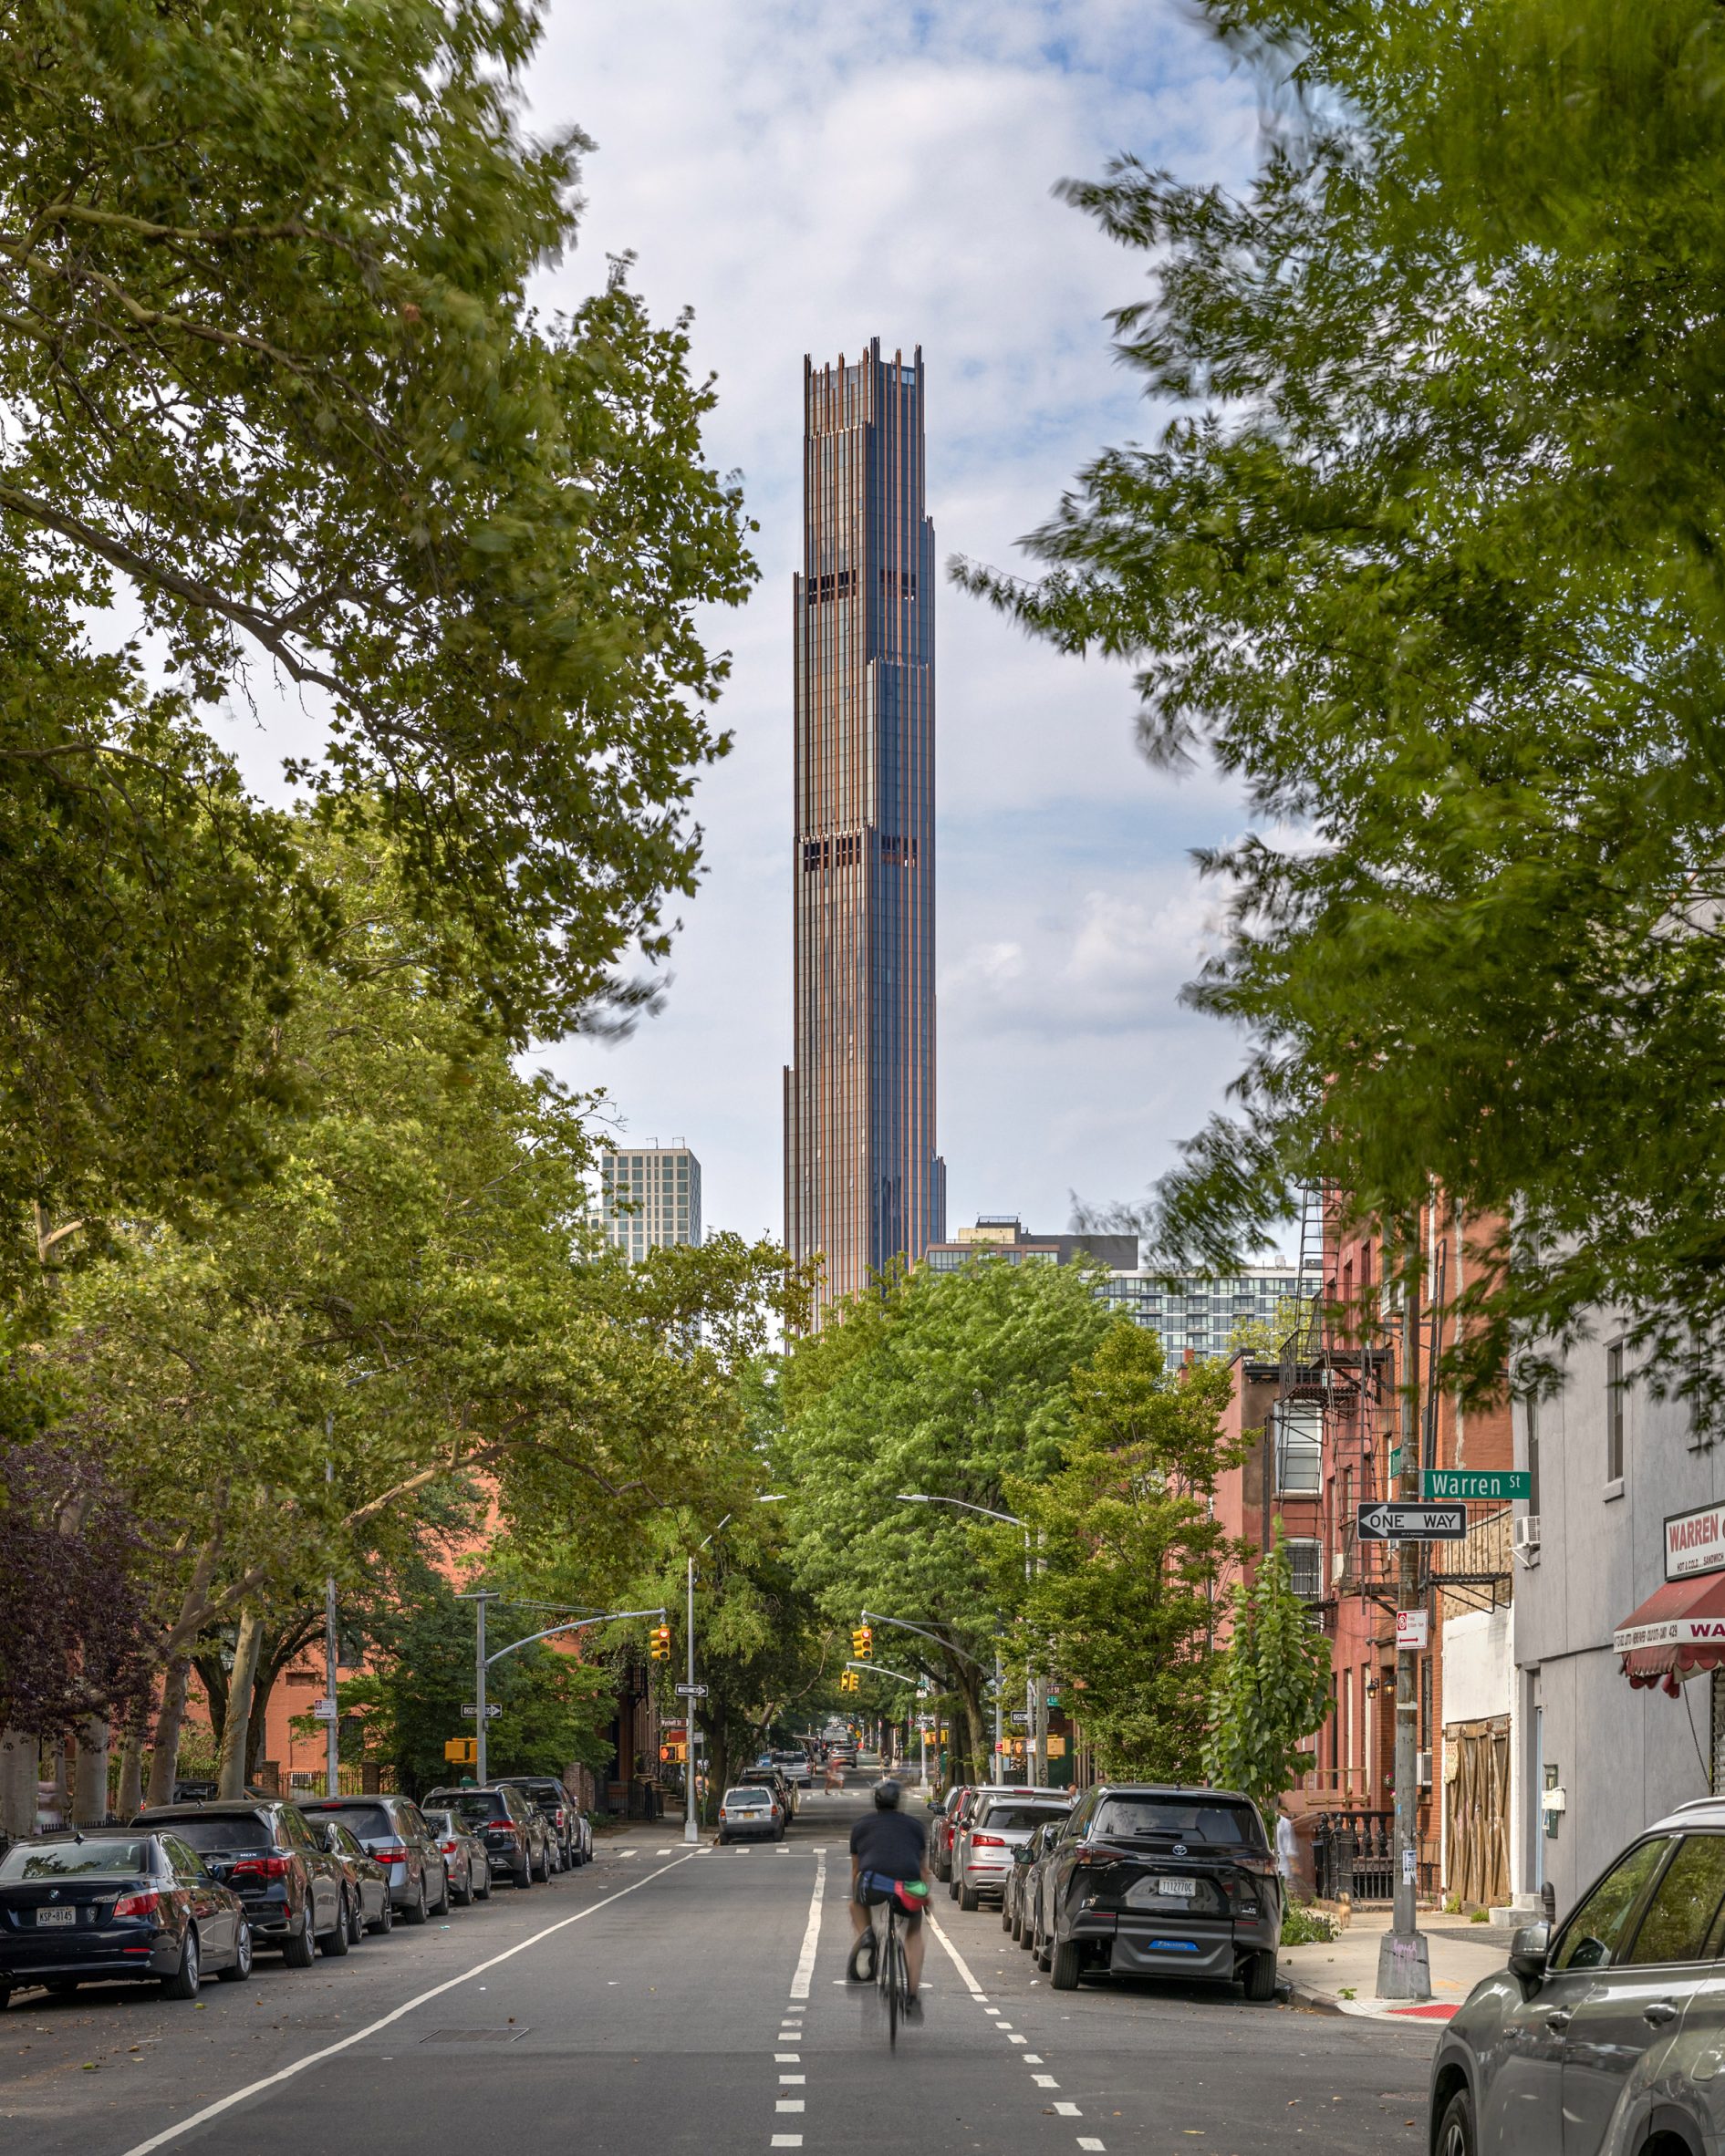 Brooklyn Tower rising from between trees on Dekalb Street in Brooklyn